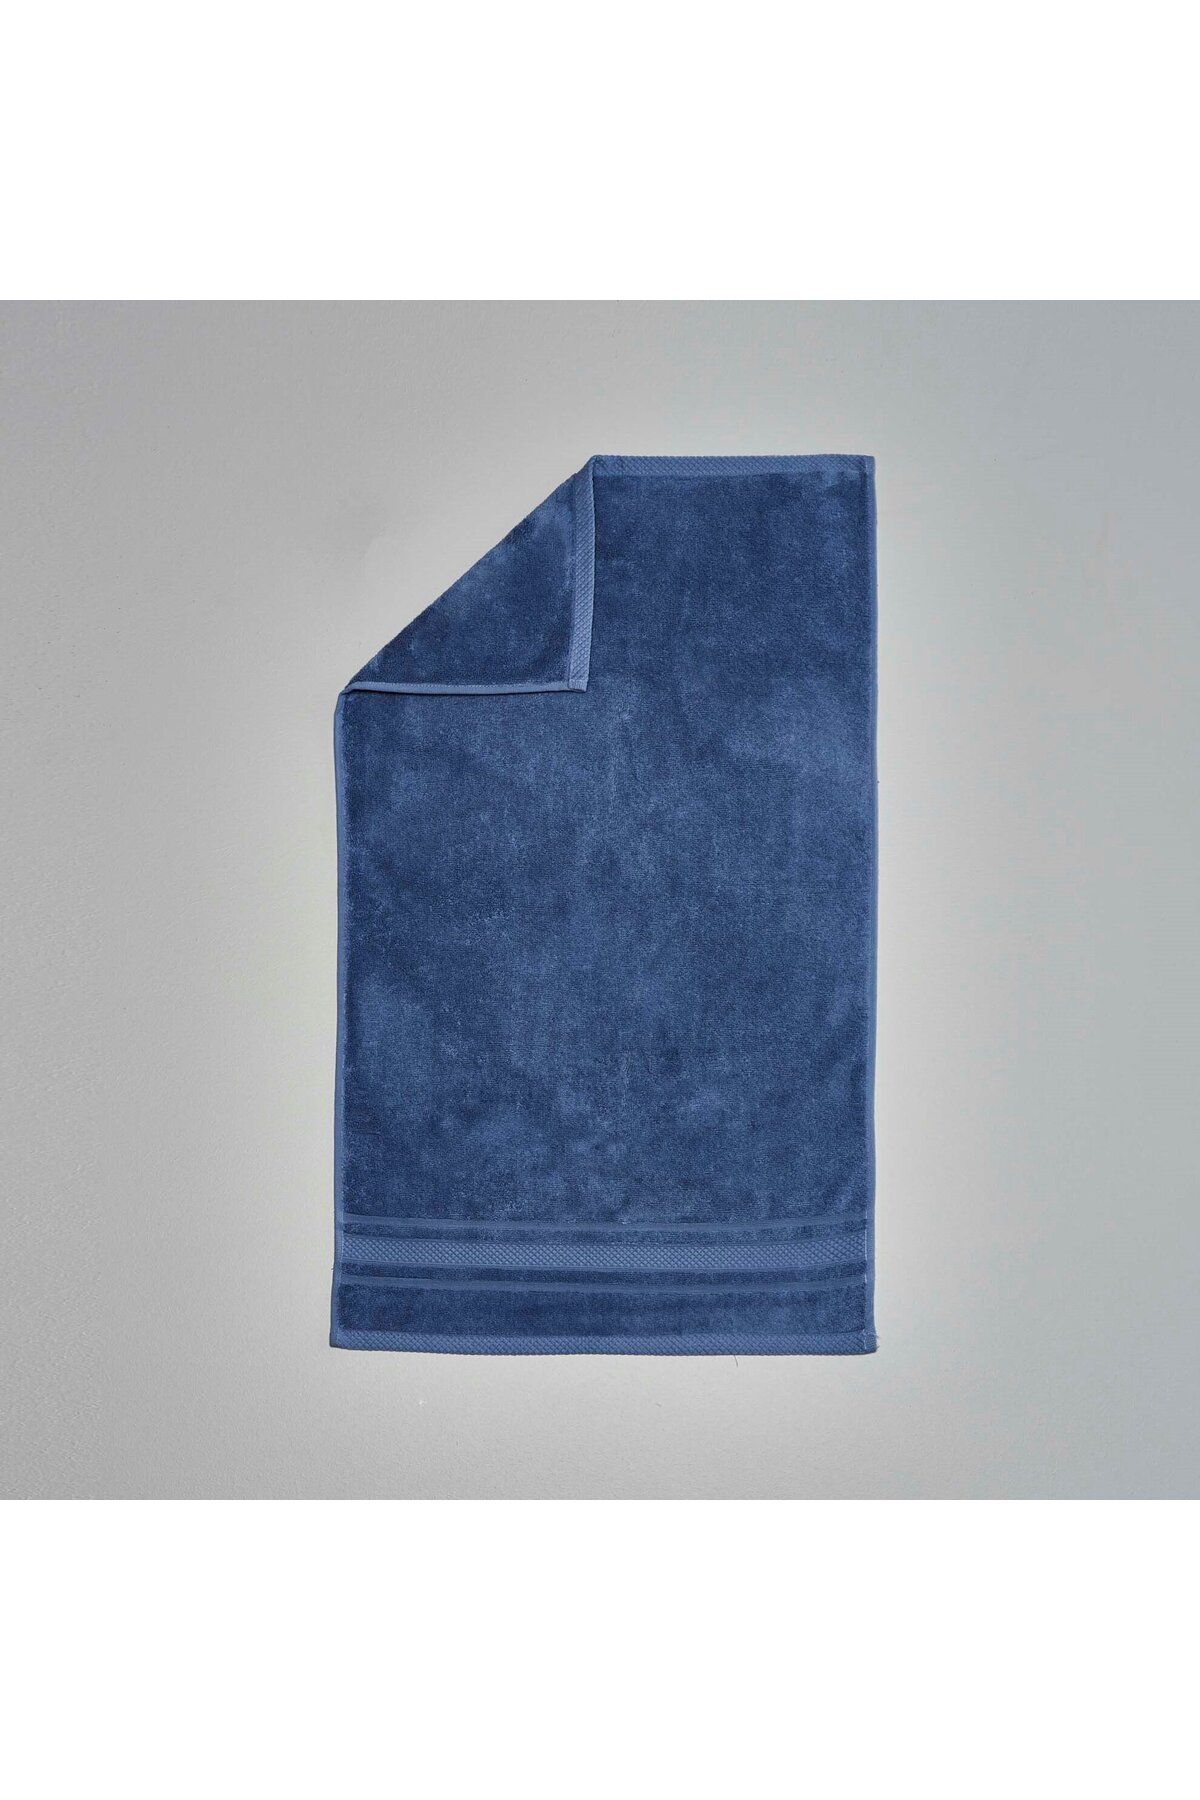 Linens Soft Pamuk 50x85 Cm Yüz Havlusu Koyu Mavi